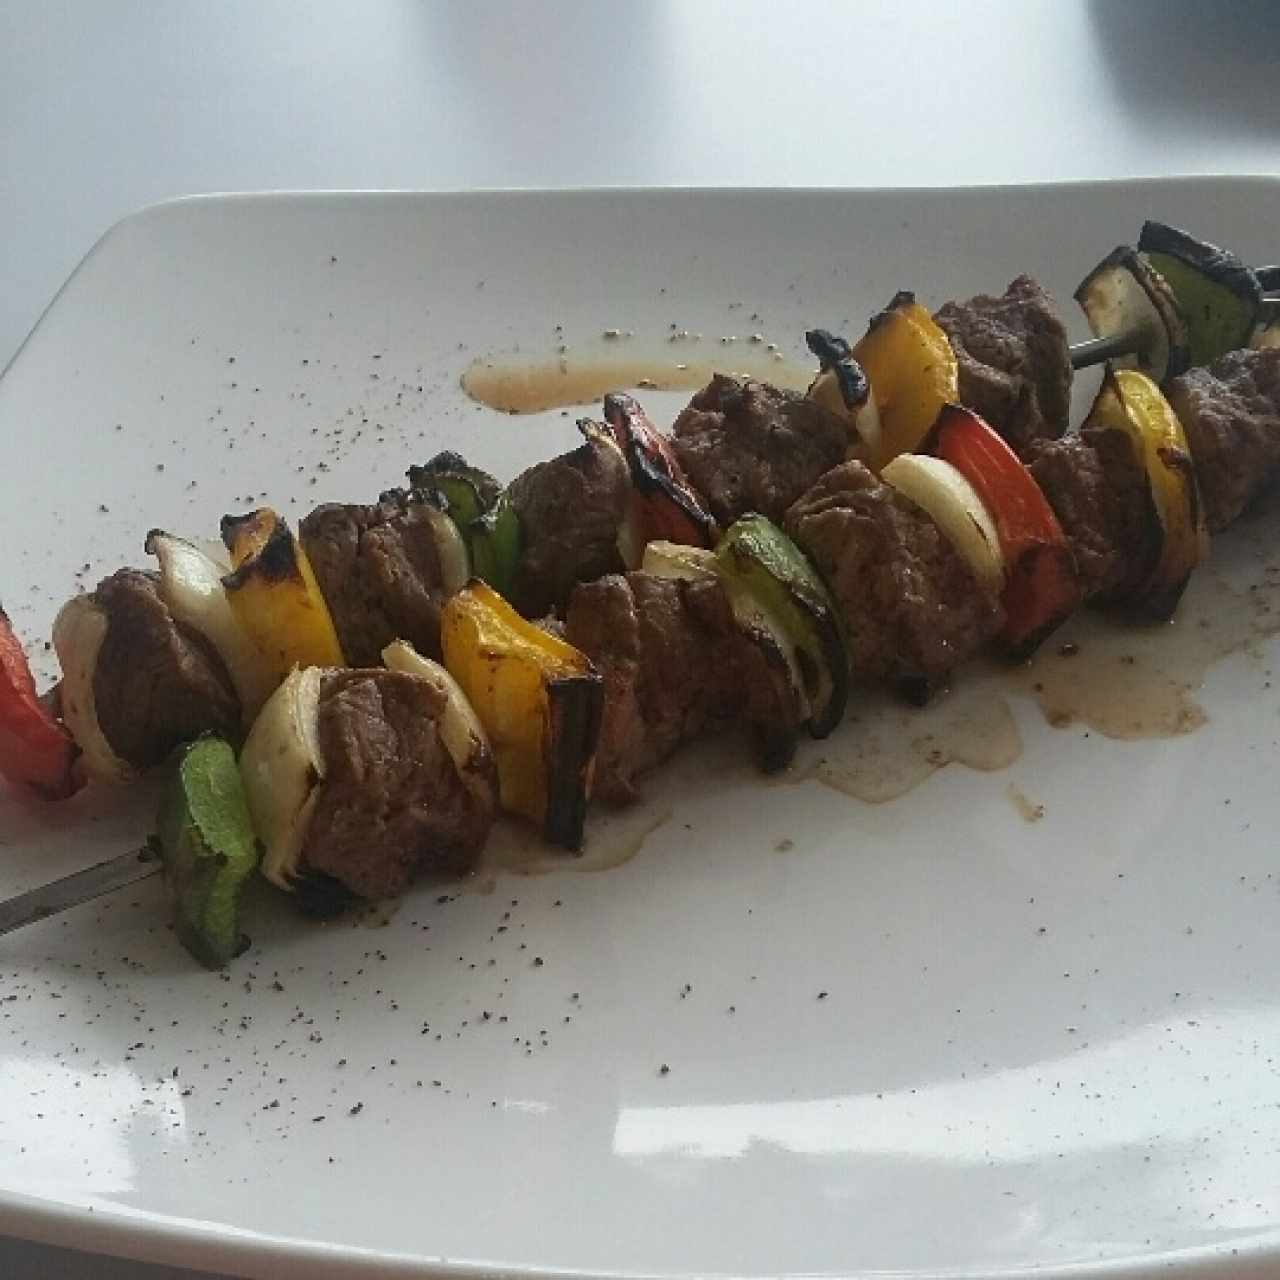 Kebab de carne